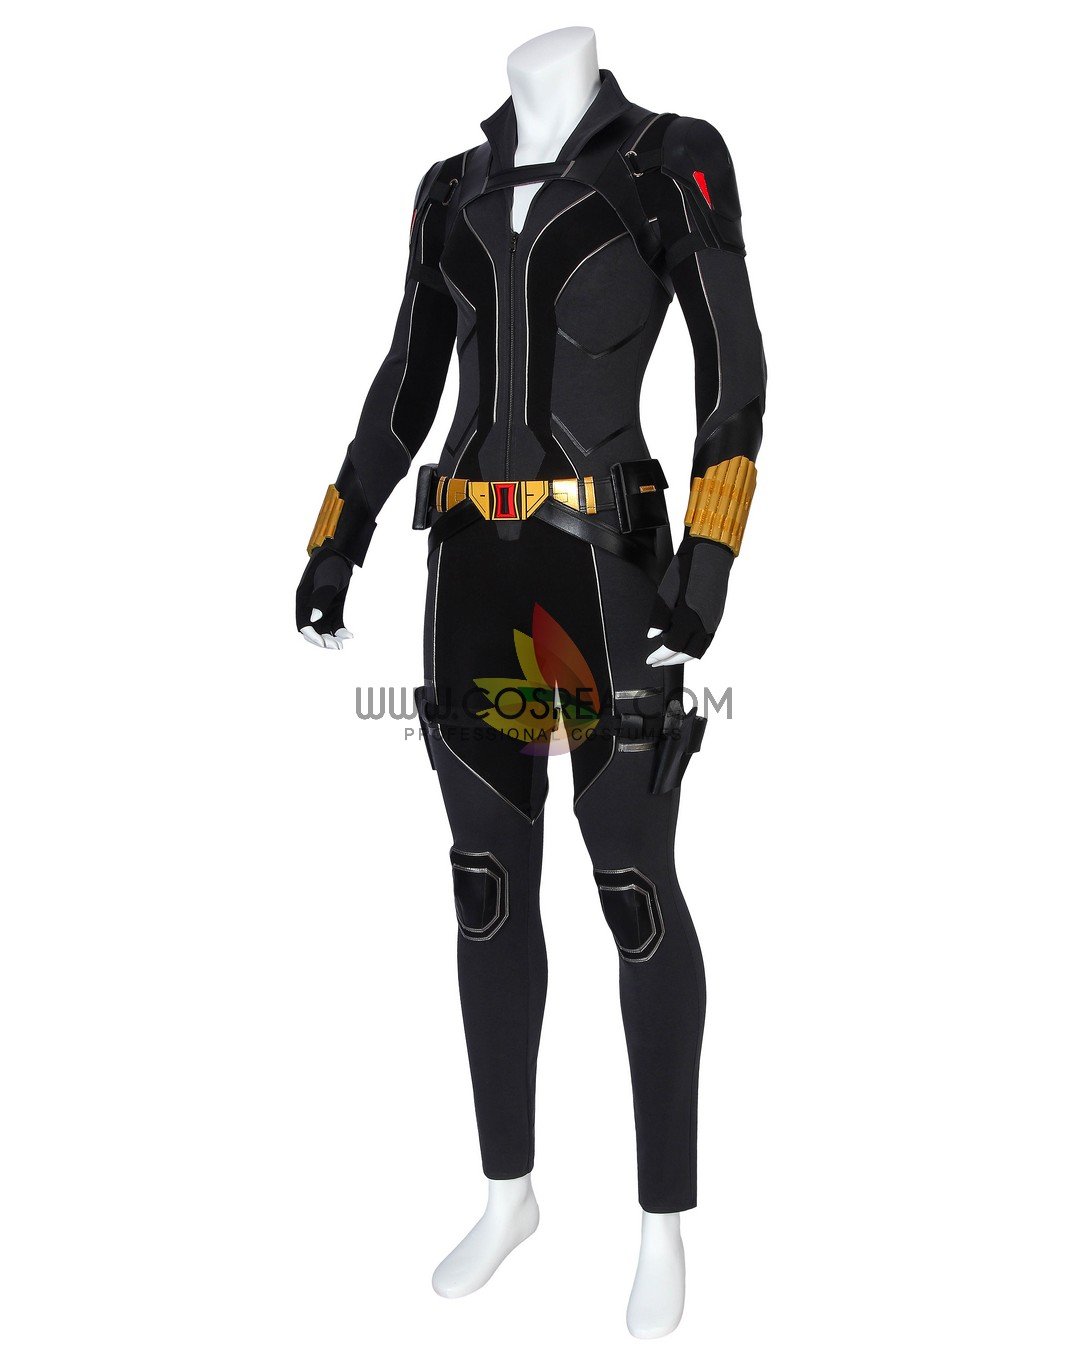 Black Widow Movie Complete Cosplay Costume